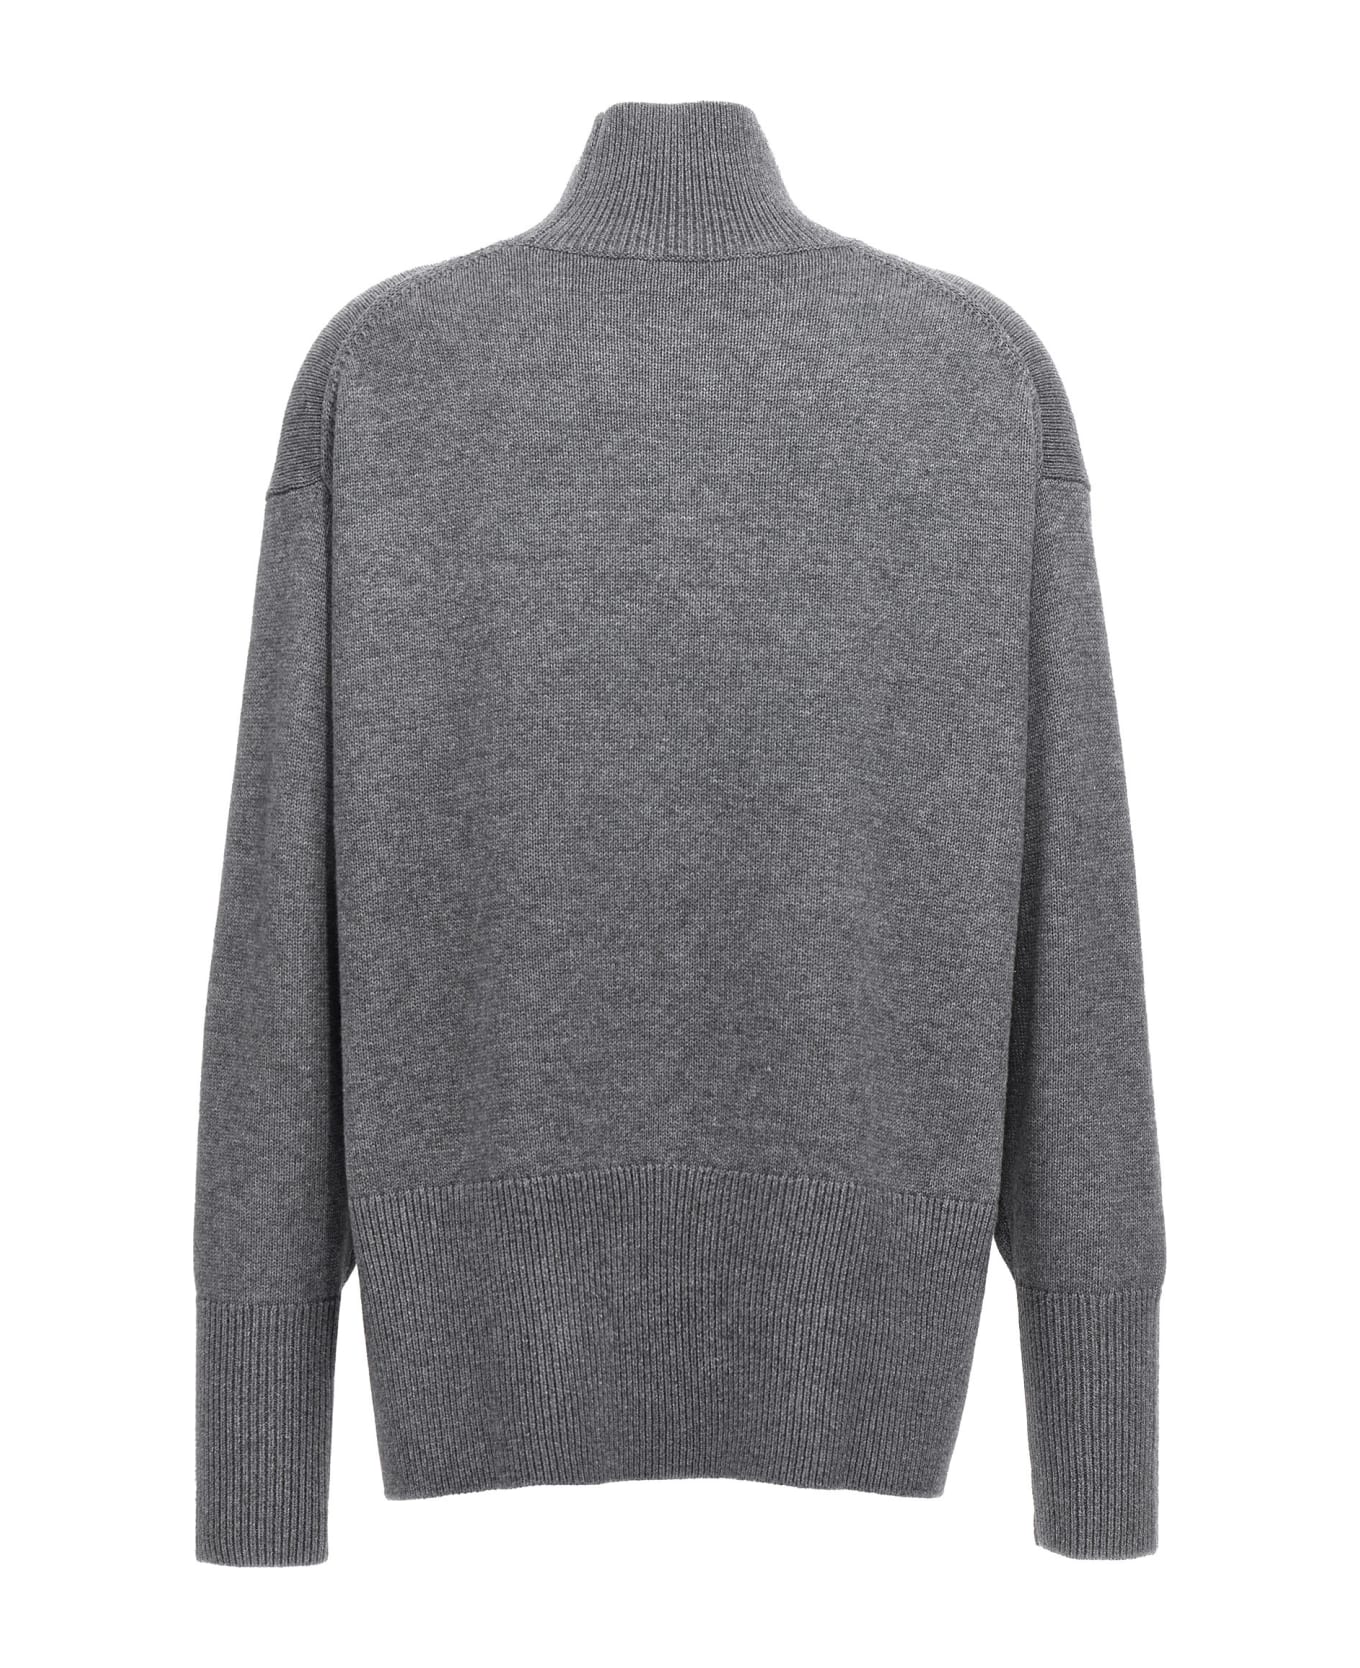 Studio Nicholson 'viere' Sweater - Gray